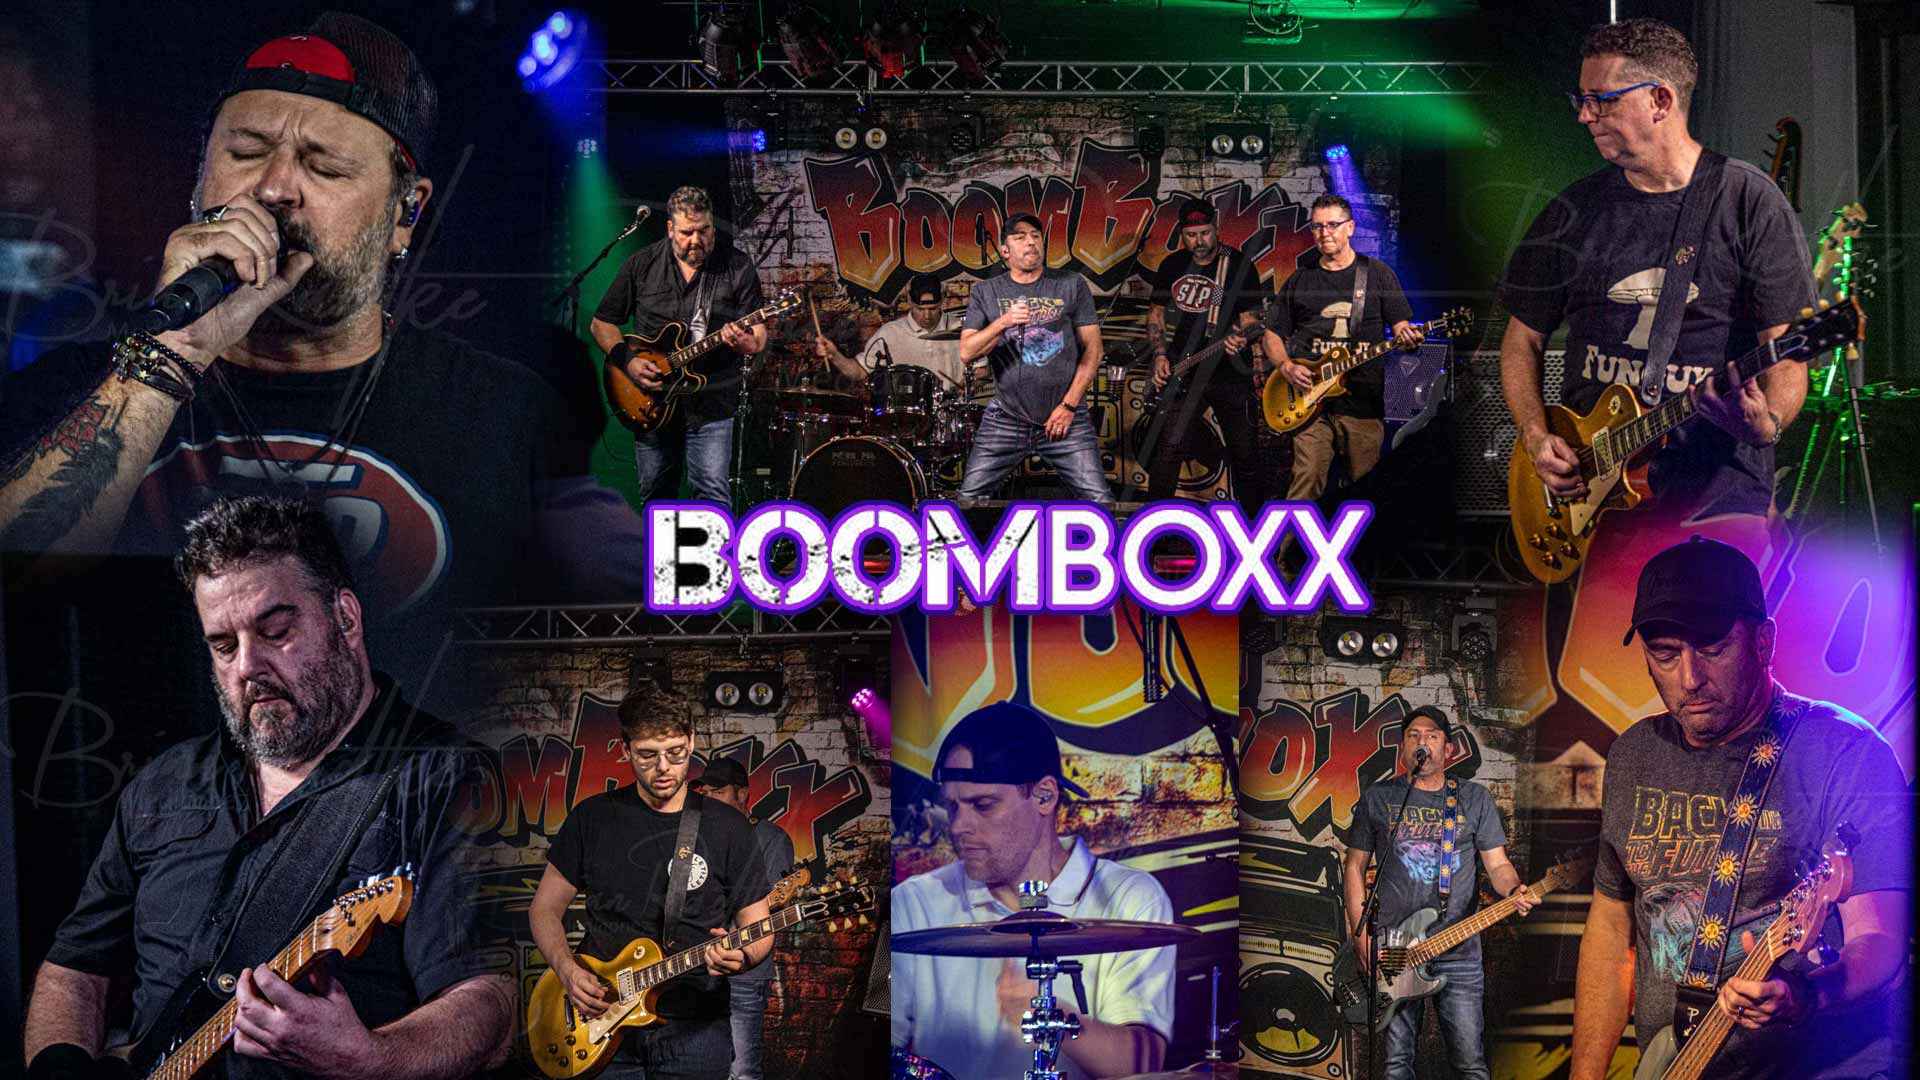 Boomboxx Band at Stonetoad in Menasha WI